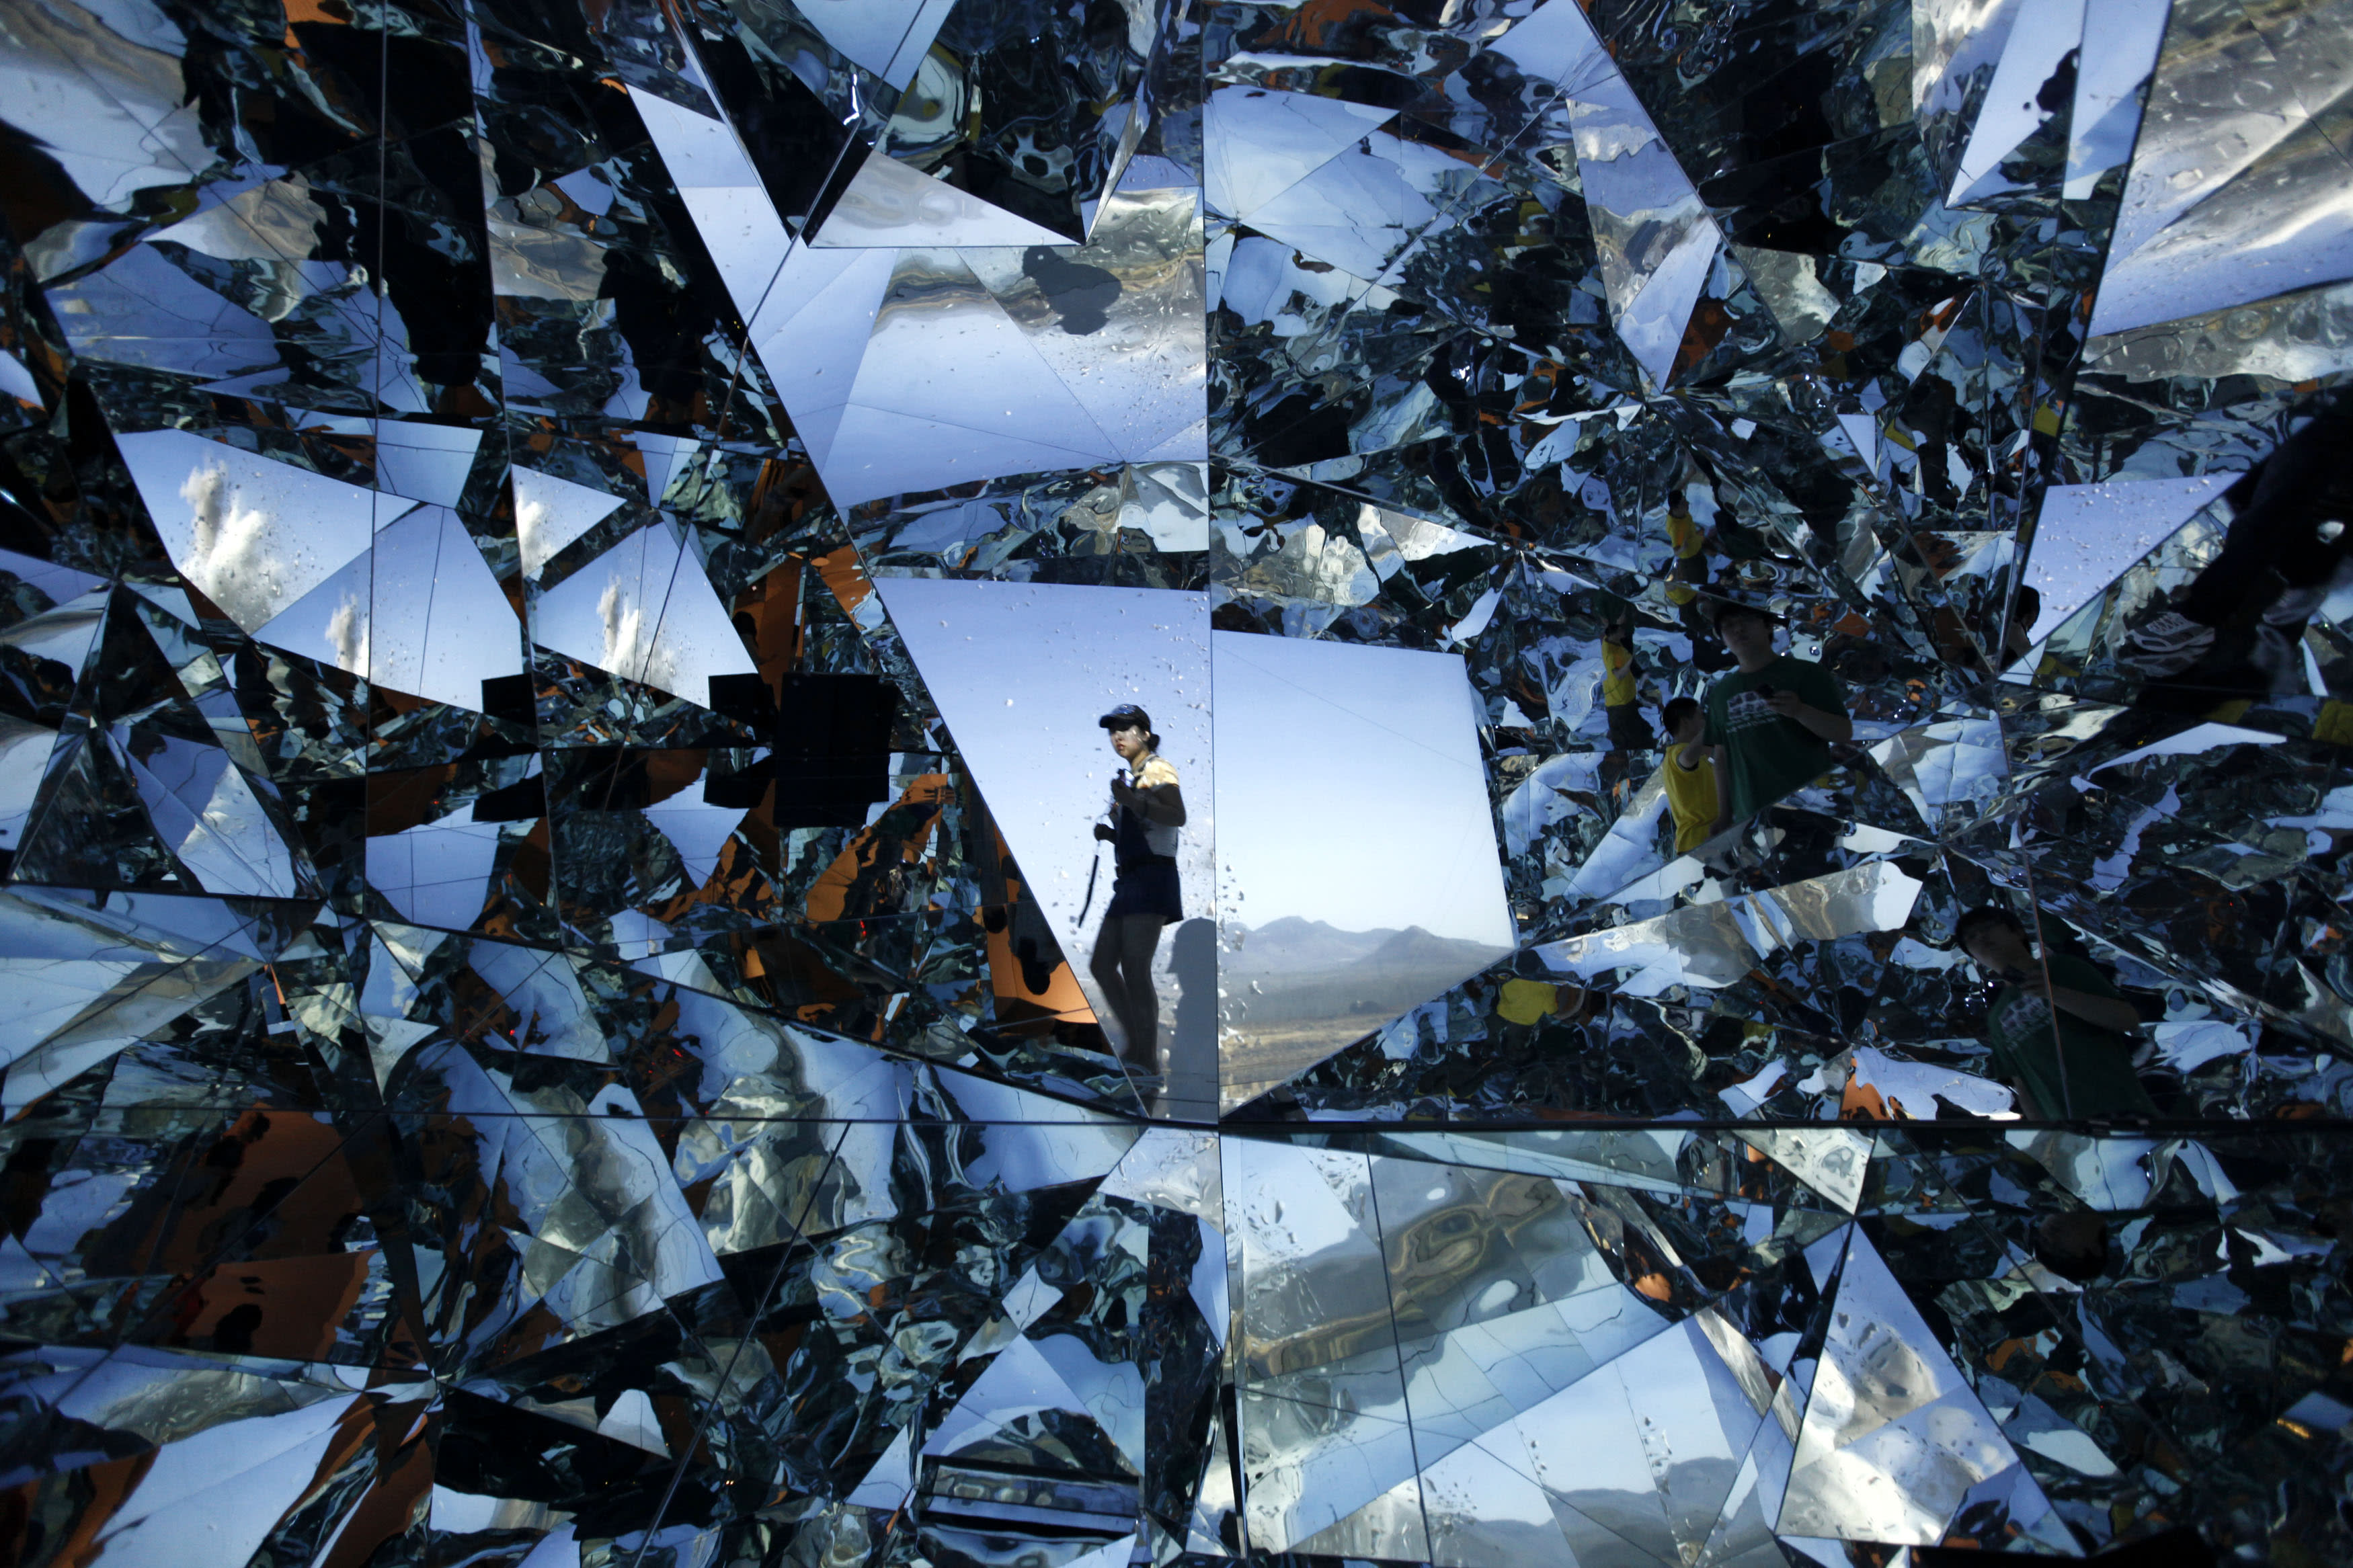 Sewelo Diamond: Louis Vuitton Buys World's Second-Largest Diamond